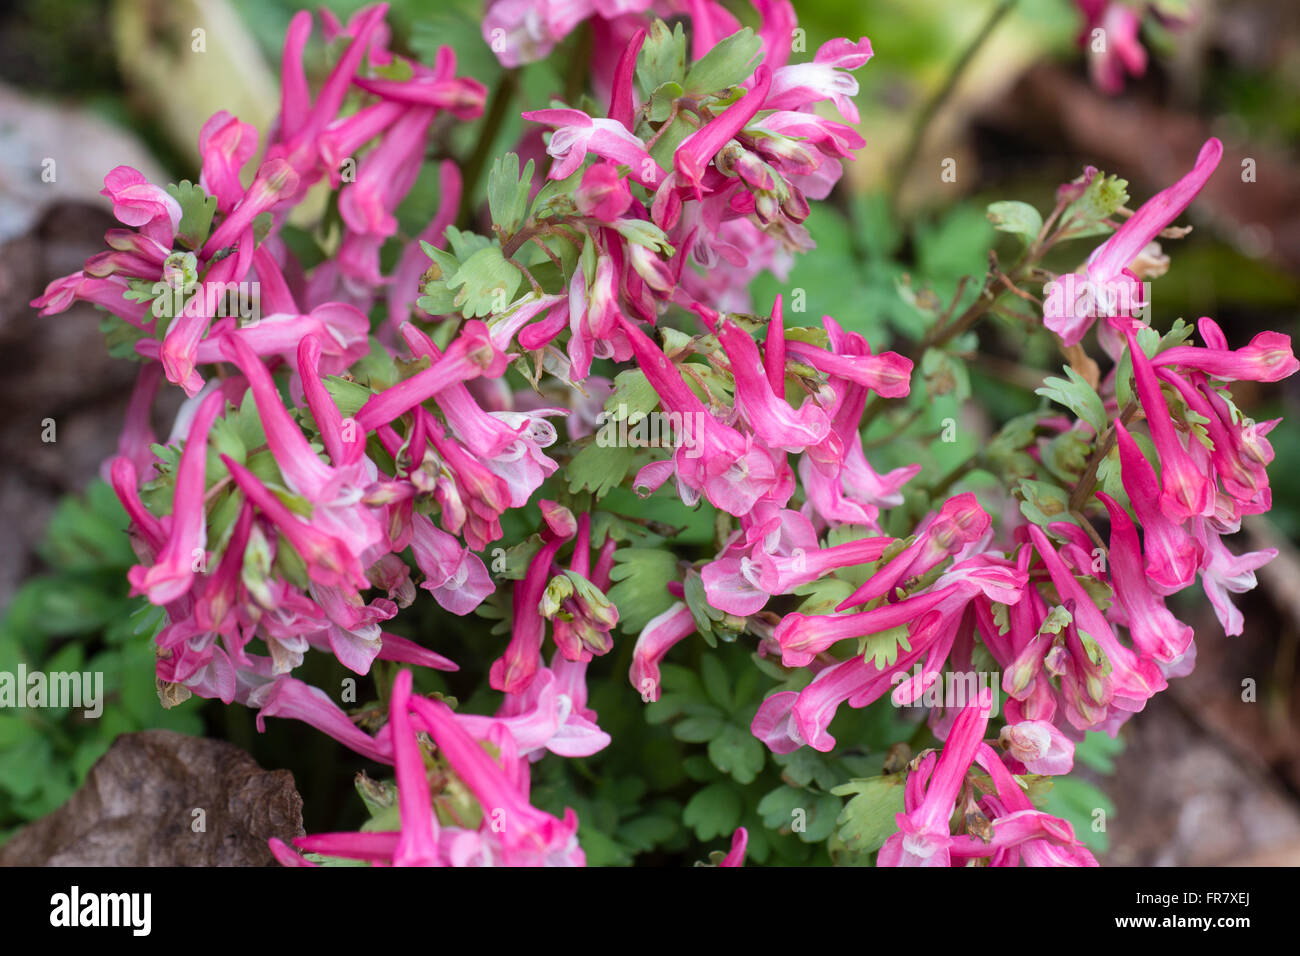 Tubular flowers of the early spring flowering ephemeral, Corydalis solida 'Beth Evans' Stock Photo